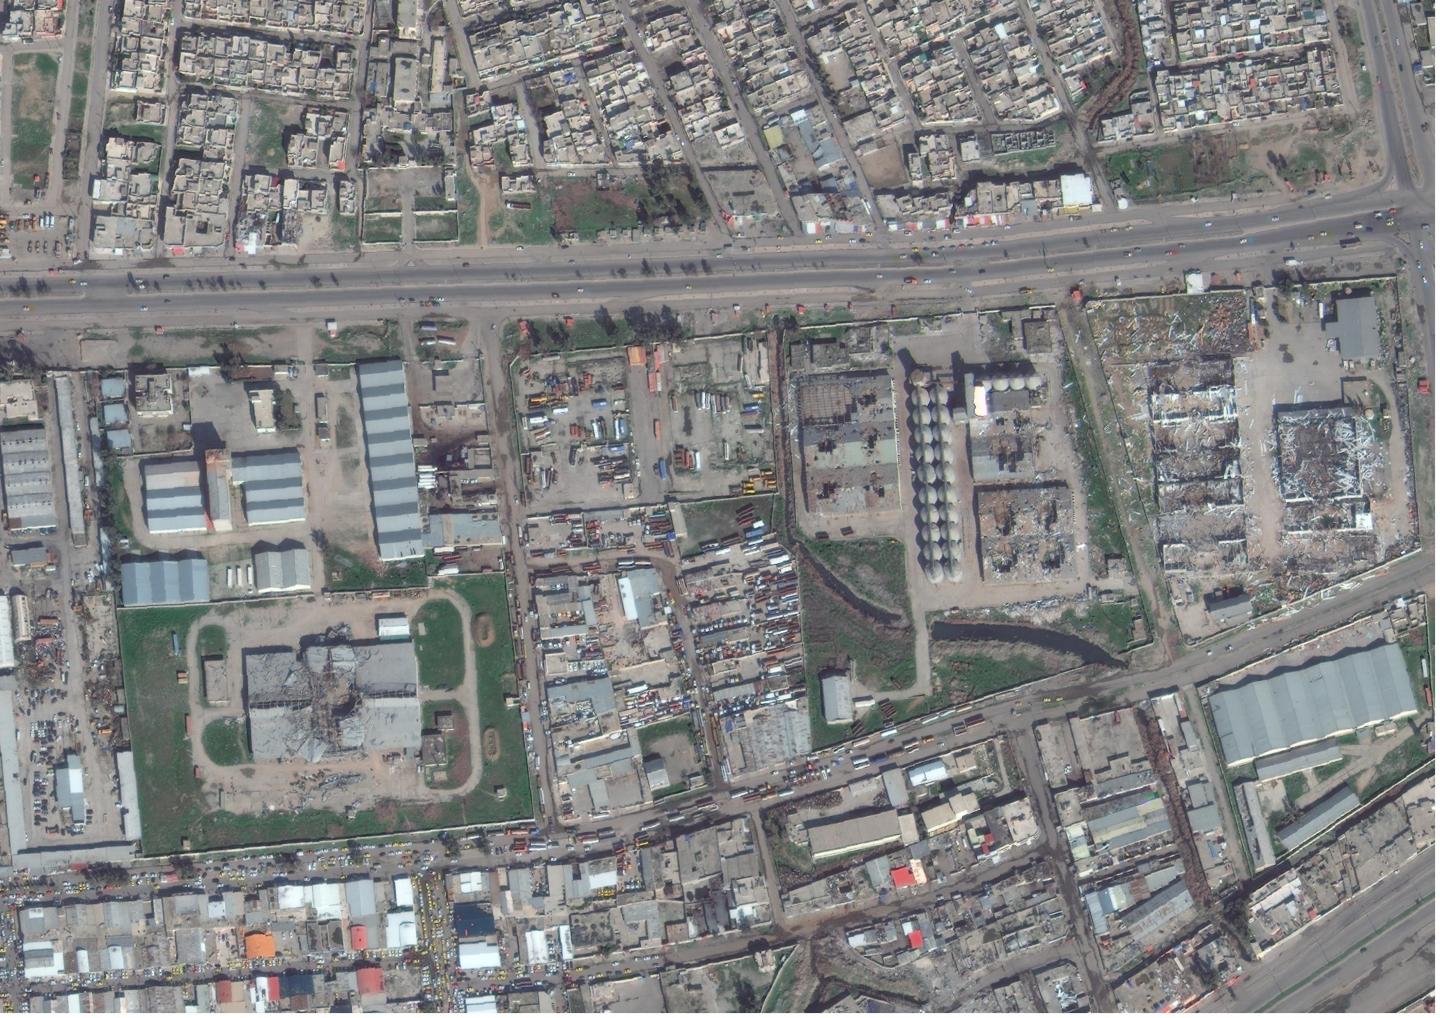 Mosul's Mintaqah Industrial Area